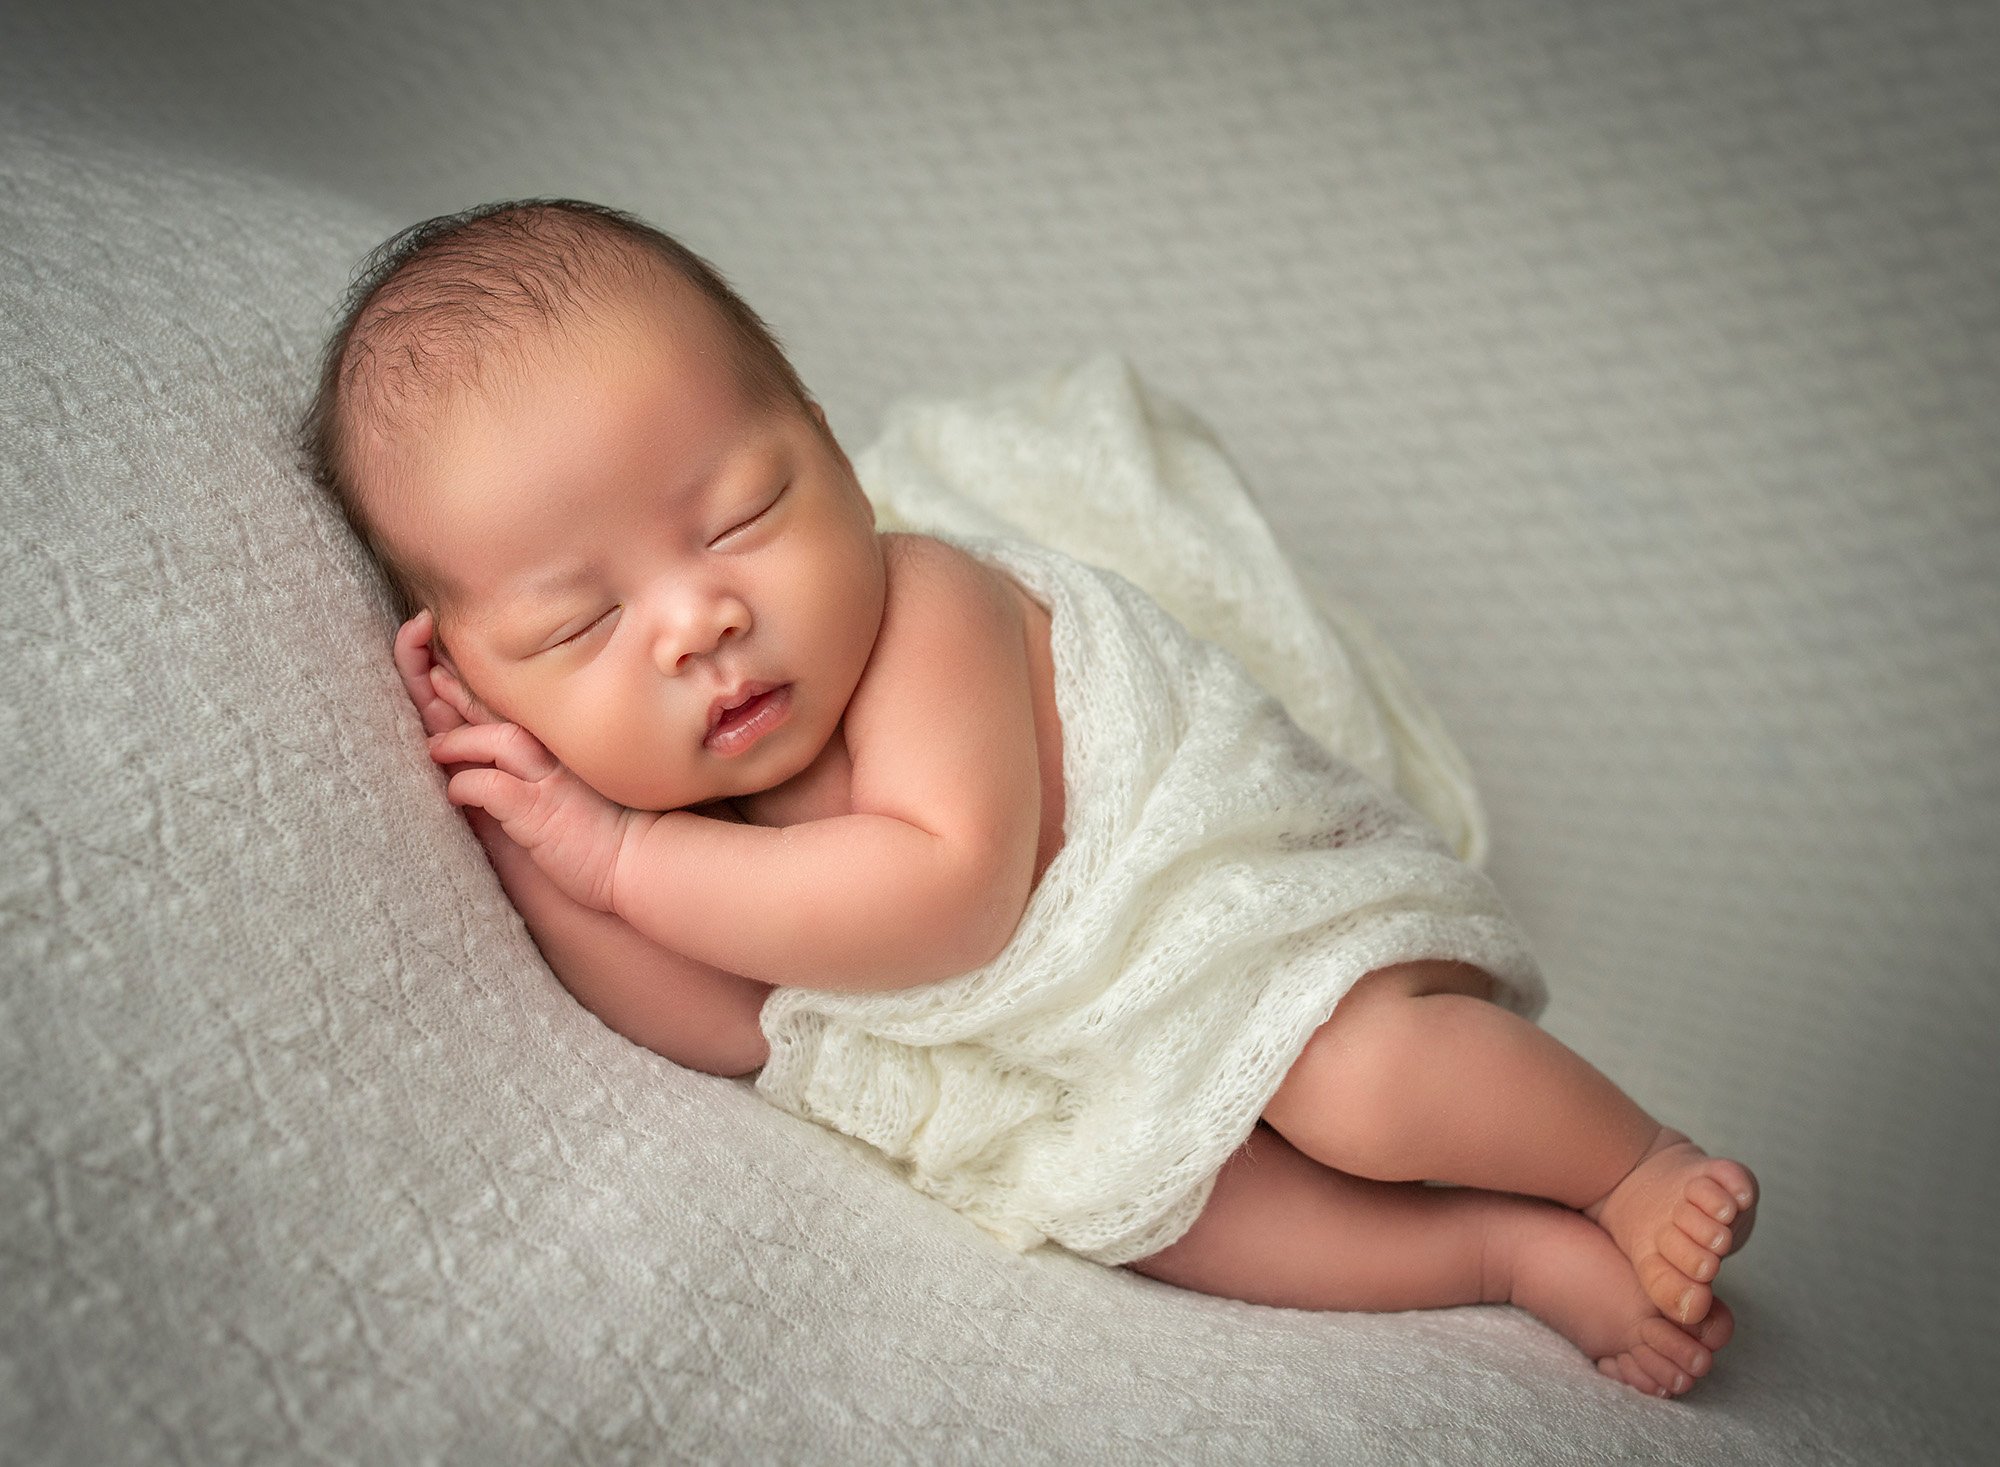 Baby Boy Newborn Photos newborn baby boy asleep on white blanket partially covered by off white wrap